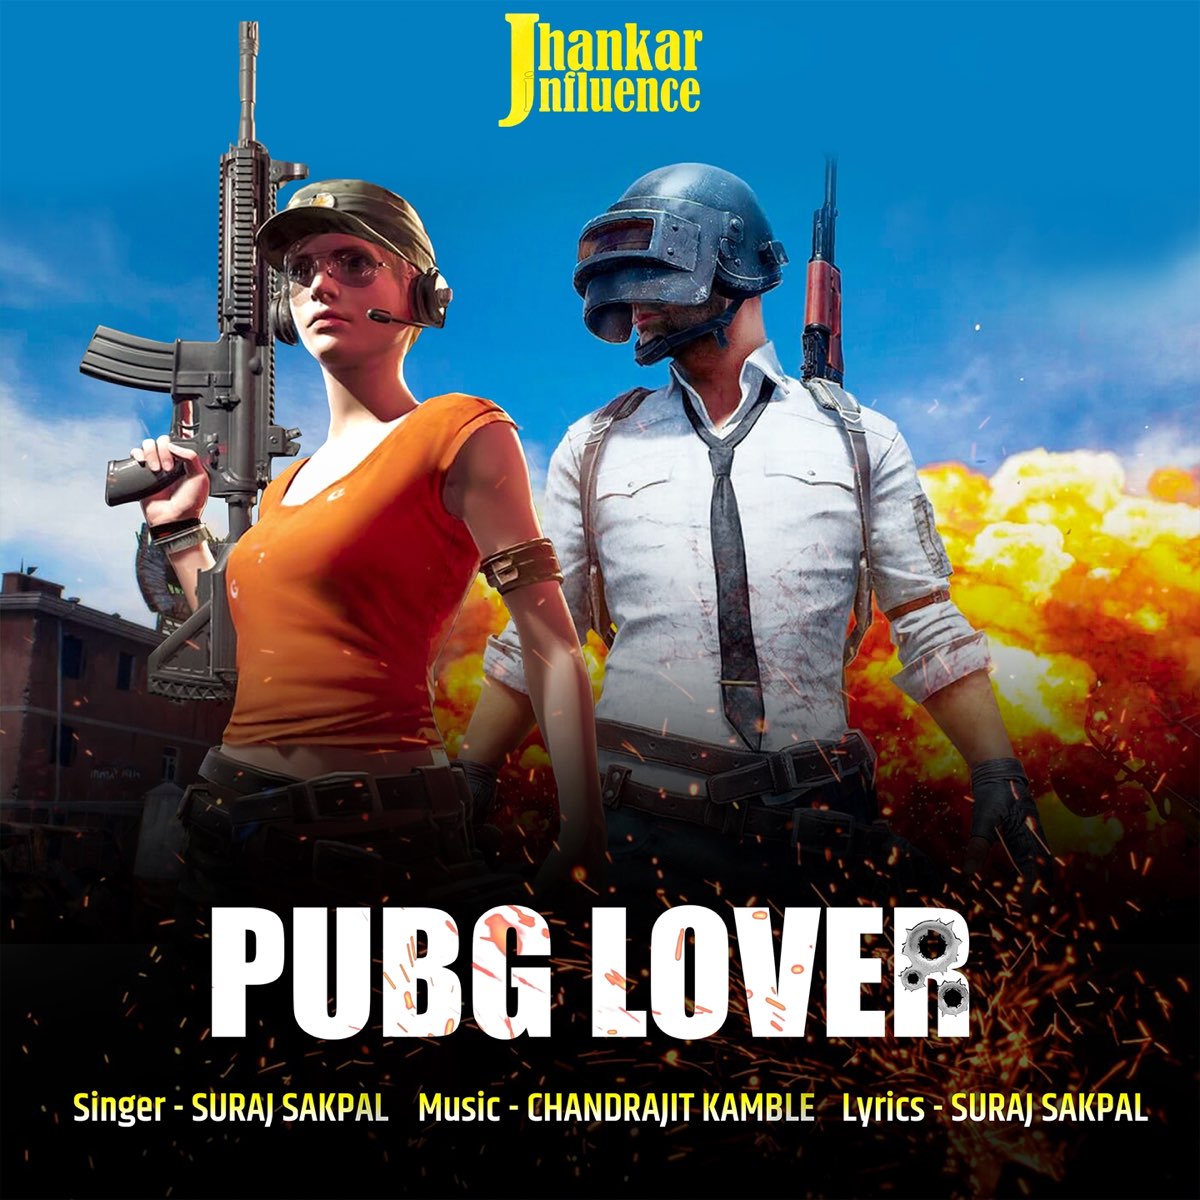 Pubg Lover - Single by Suraj Sakpal on Apple Music